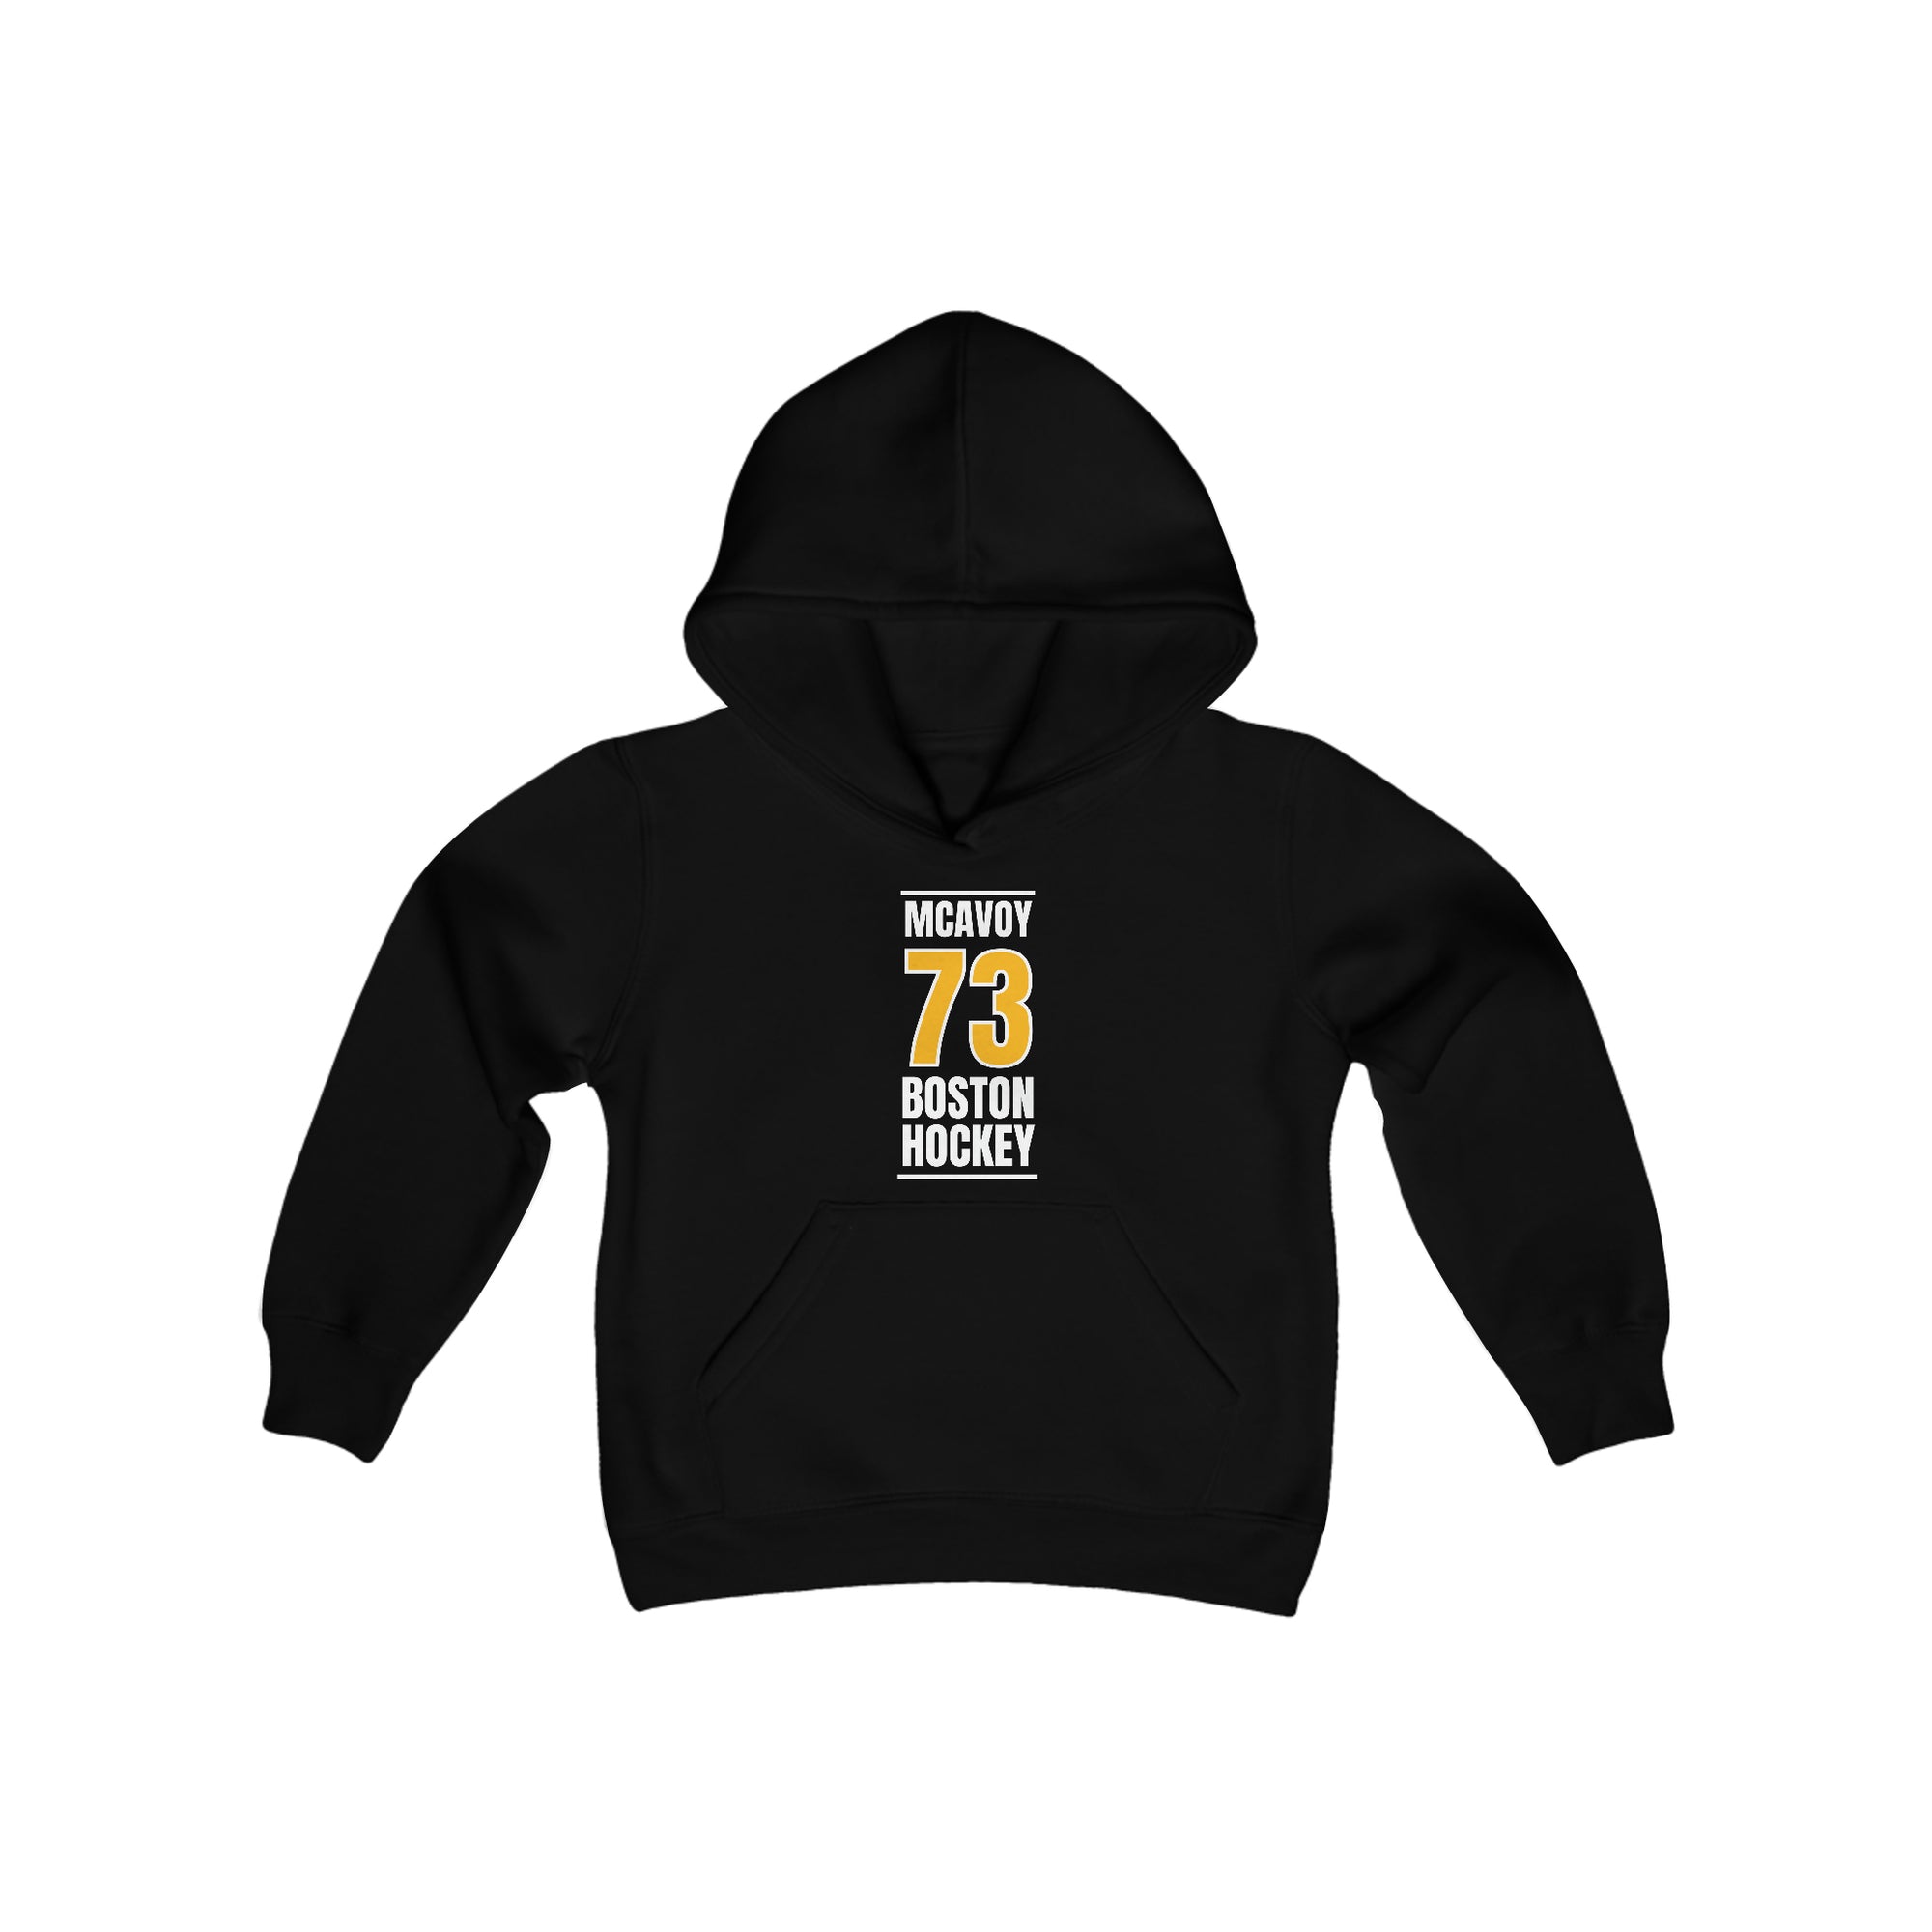 McAvoy 73 Boston Hockey Gold Vertical Design Youth Hooded Sweatshirt